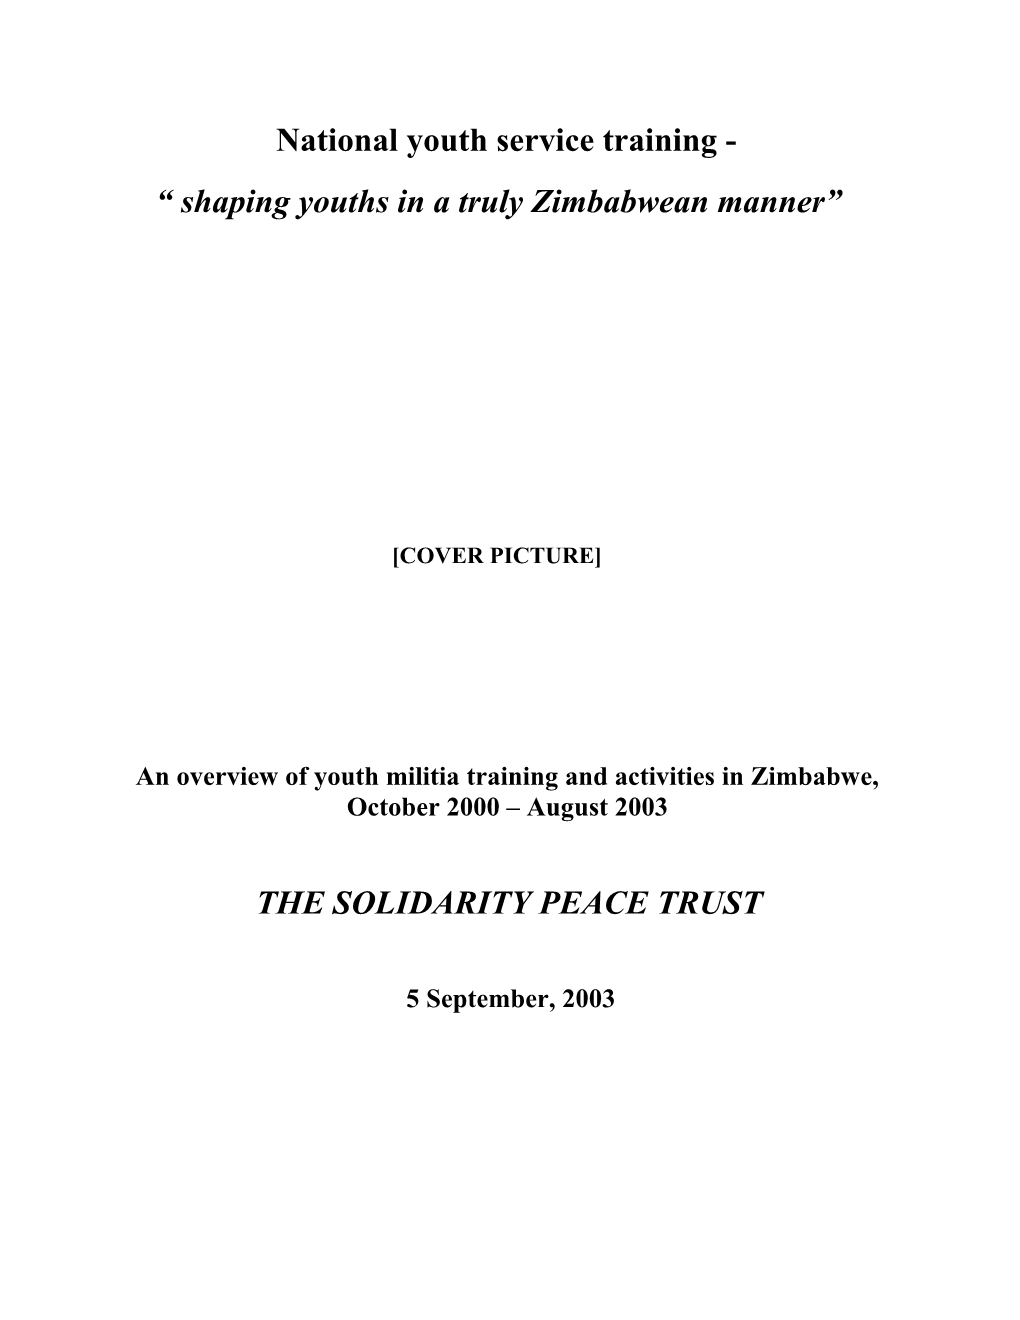 Youth Militia in Zimbabwe, November 2001 July 2003